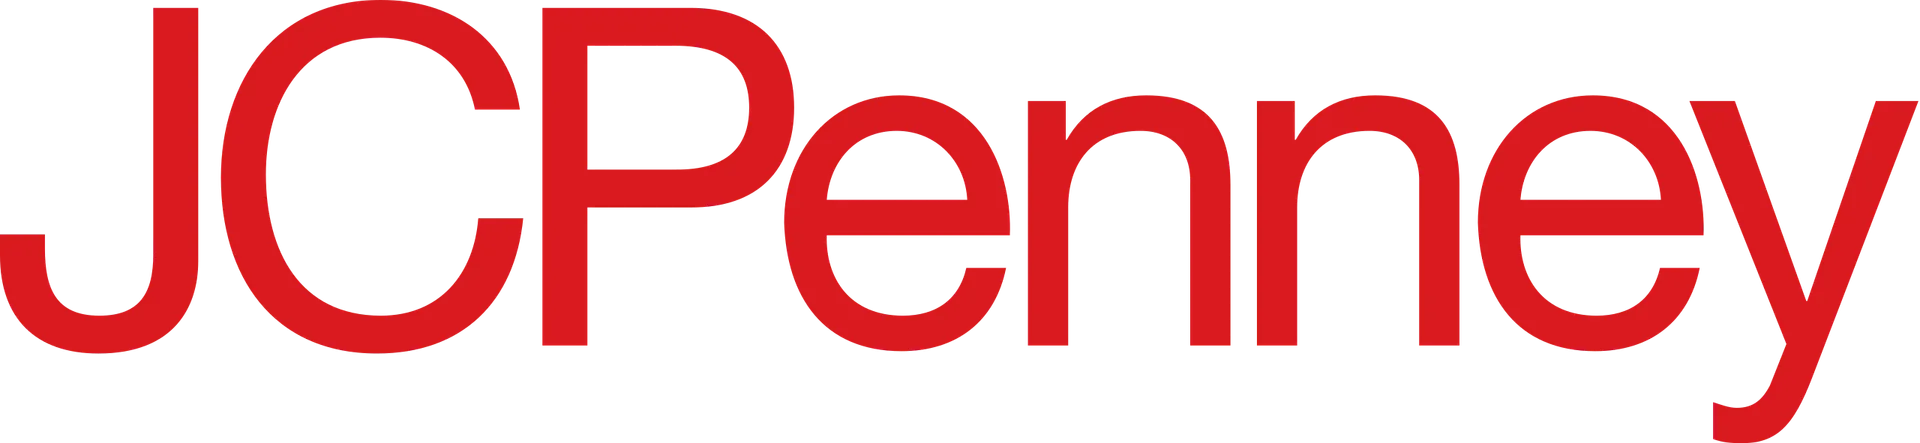 JCPENNEY logo